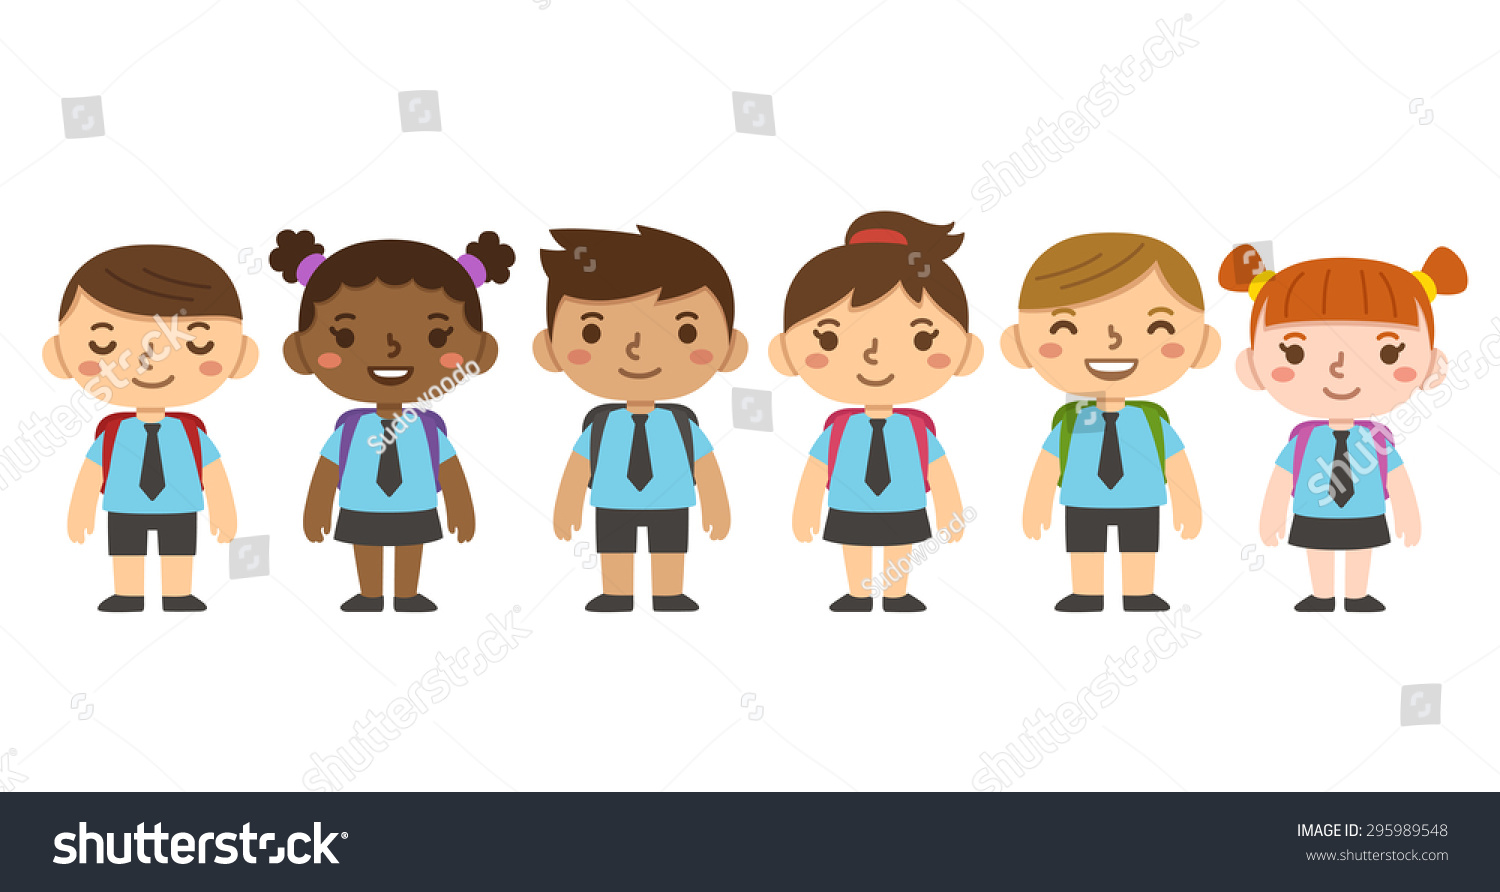 stock-vector-a-set-of-six-cute-cartoon-diverse-children-wearing-school-uniform-with-backpacks-different-295989548.jpg (1500×892)